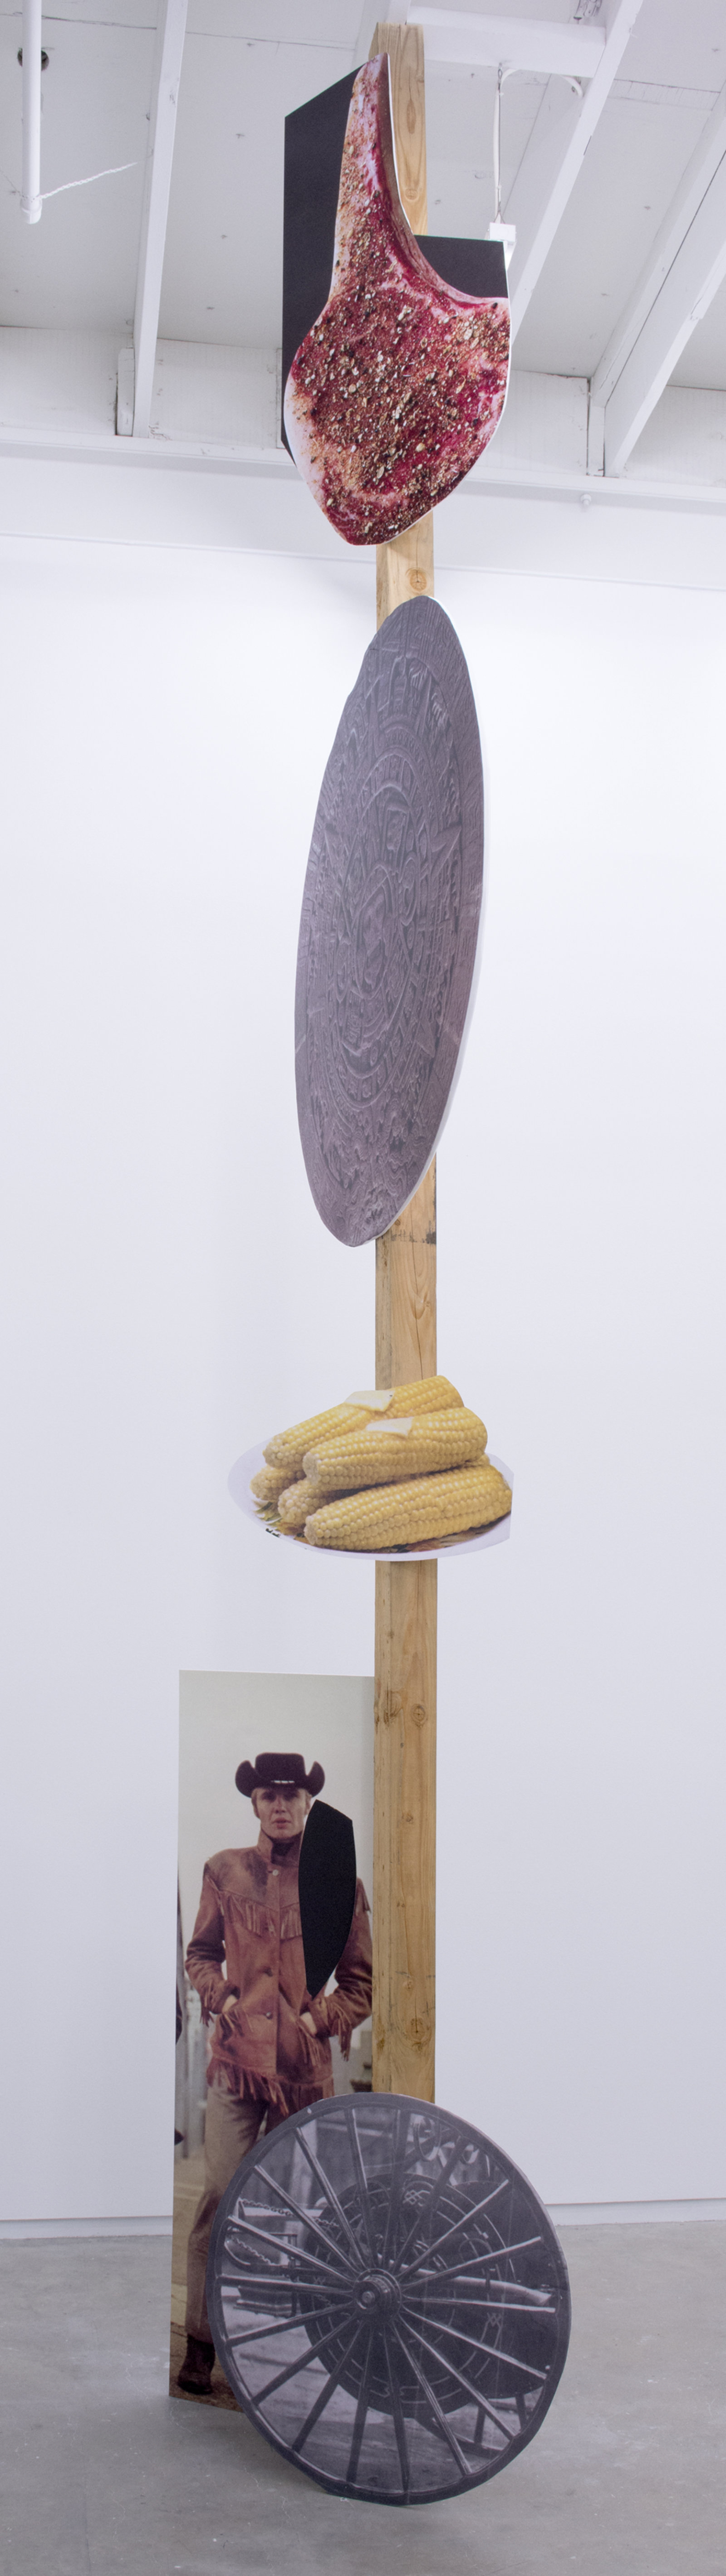 Geoffrey Farmer, Some kinds of sacrifice, 2014, douglas fir pole, 6 photographs mounted on foamcore, 200 x 4 x 4 in. (508 x 9 x 9 cm)